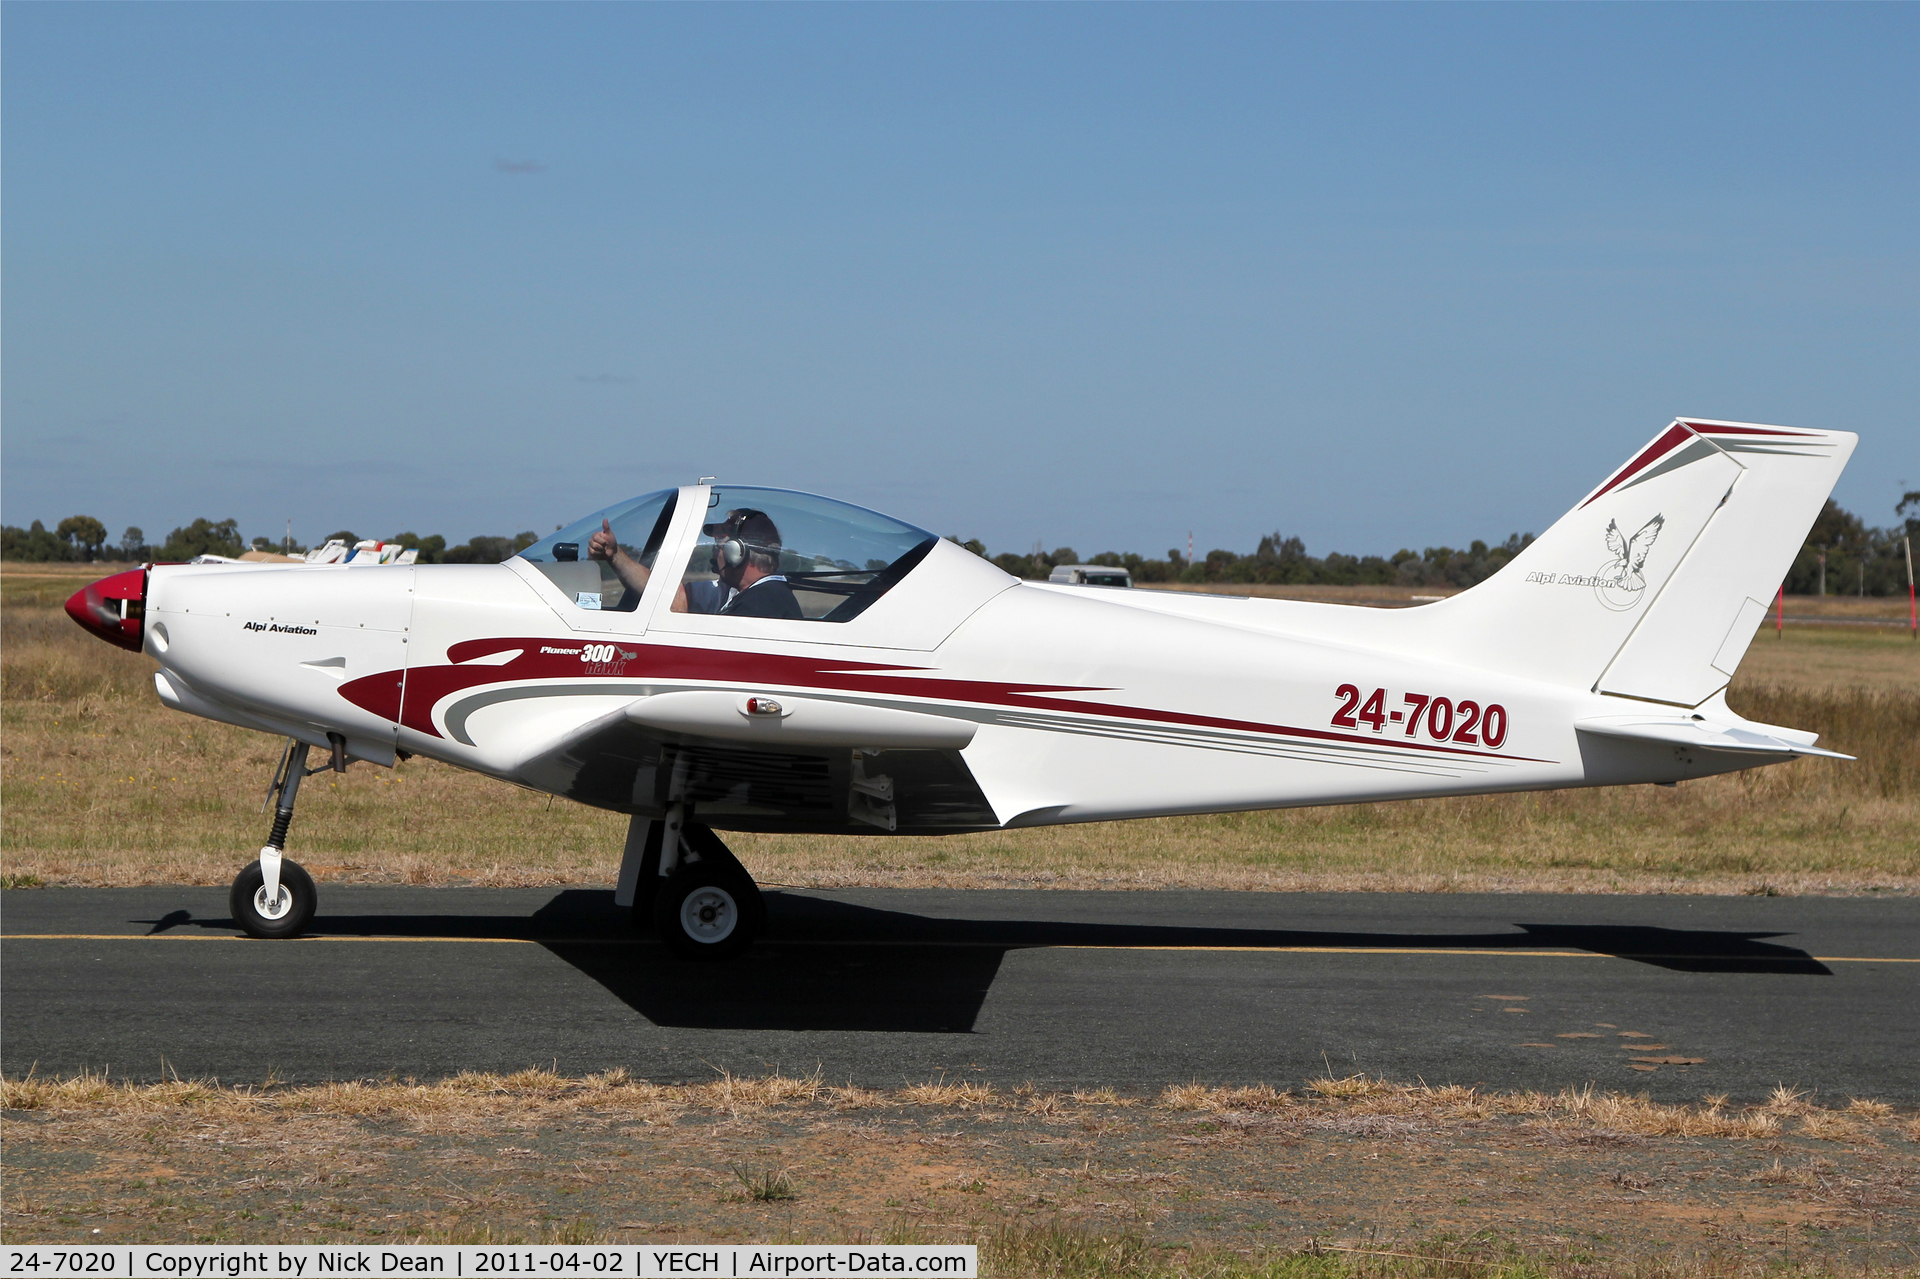 24-7020, Alpi Aviation Pioneer 300 C/N 259, YECH AAAA National fly in